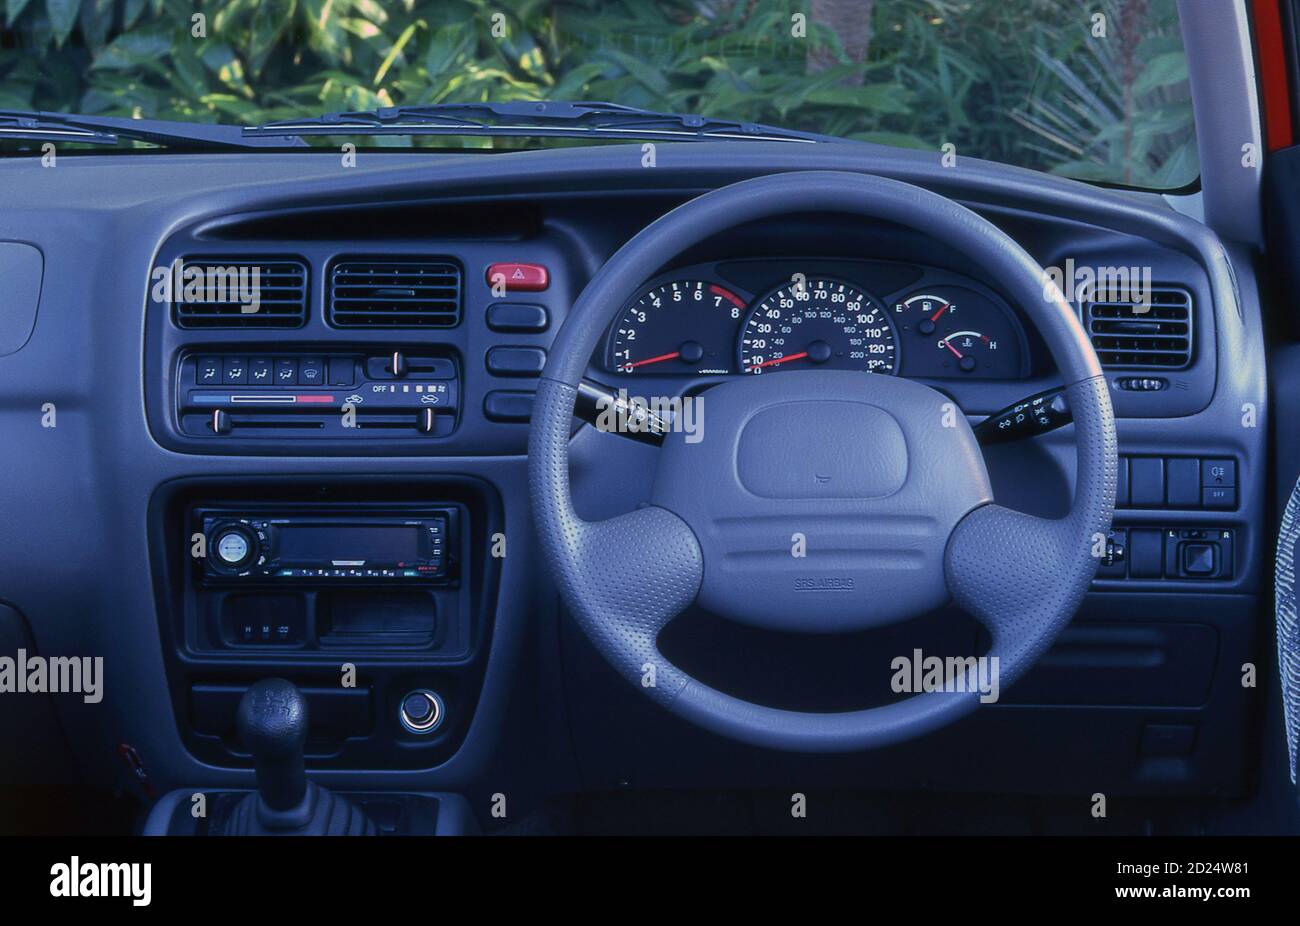 1999 Suzuki Grand Vitara GV2000. Stock Photo